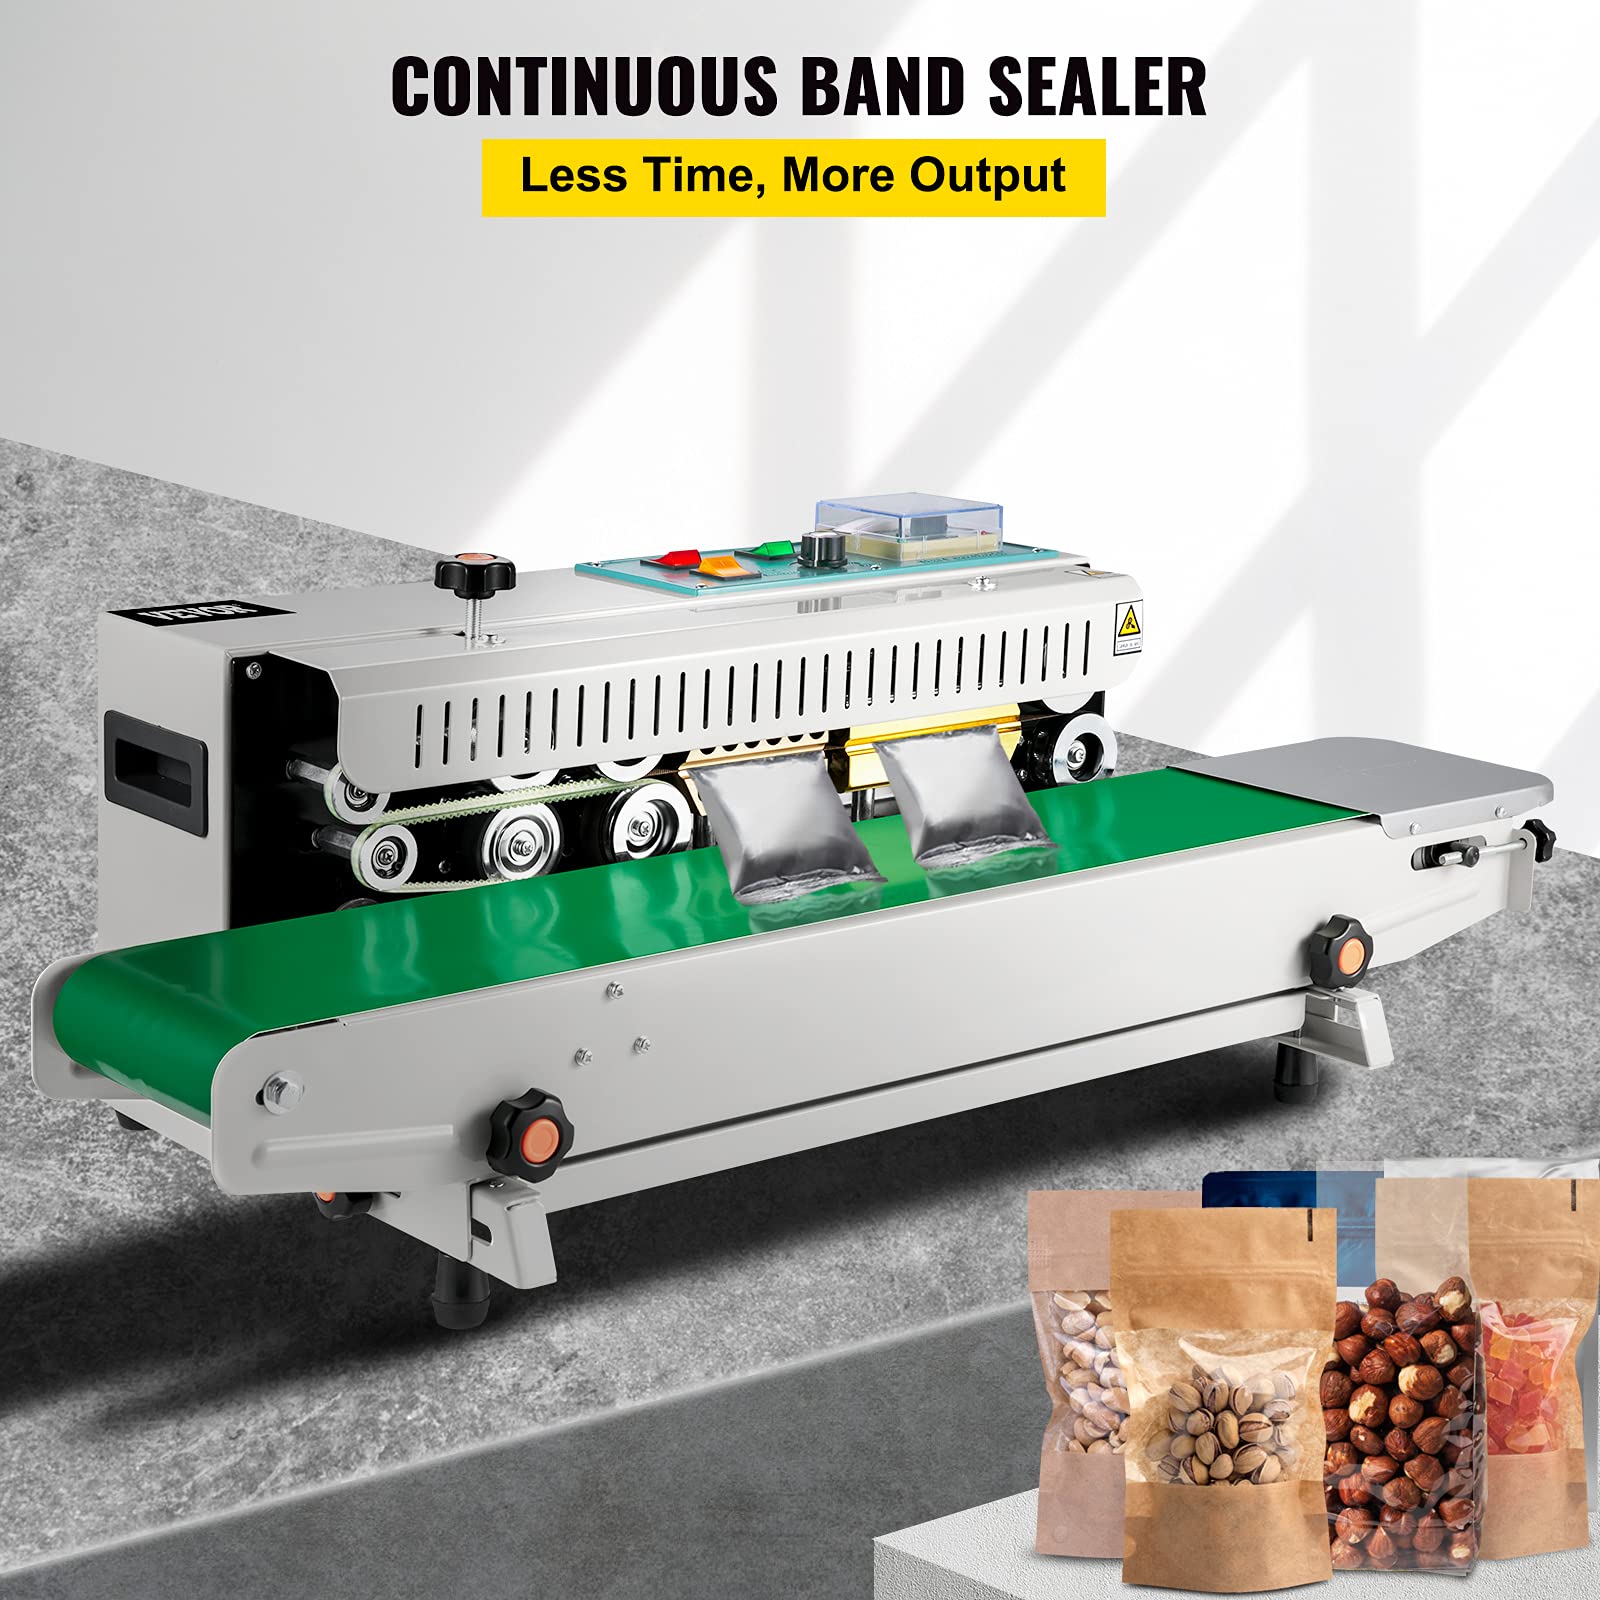 Happybuy FR-900 Continuous Band Sealer, Automatic Horizontal Band Sealer 110V, Continuous Sealing Machine Temperature Control, Bag Sealer Machine for PVC Bags Films